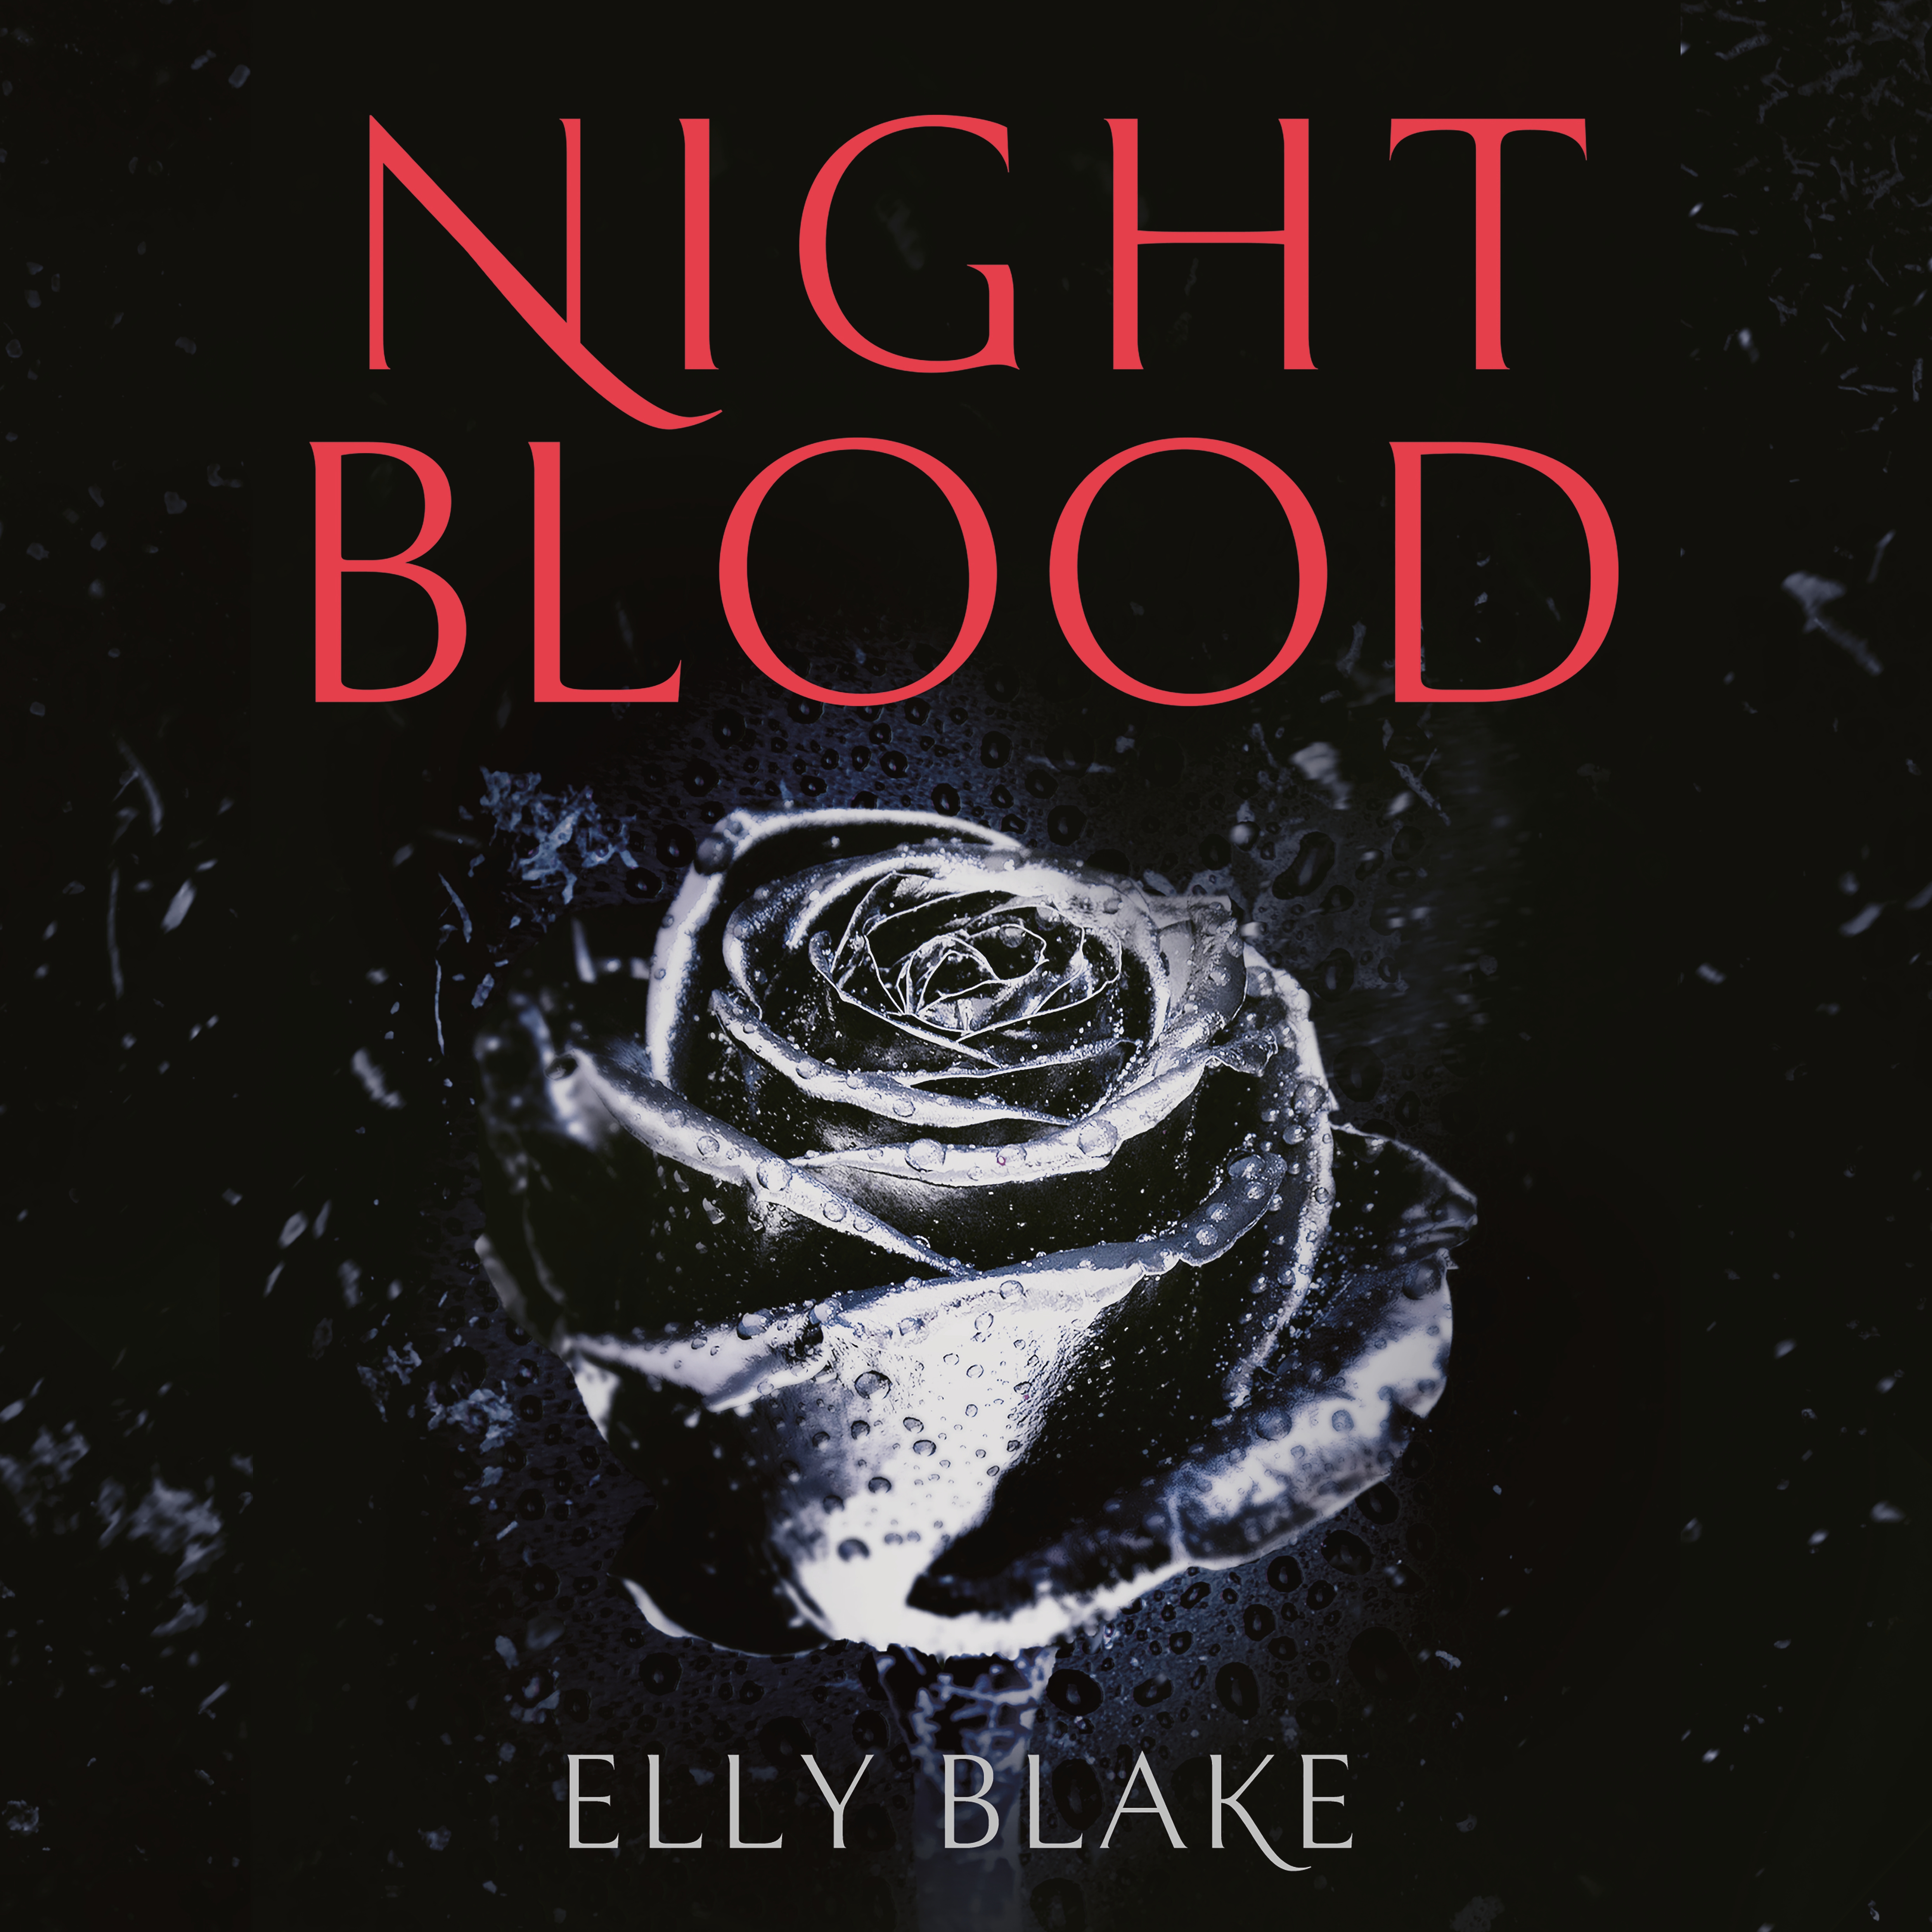 nightblood blake elly